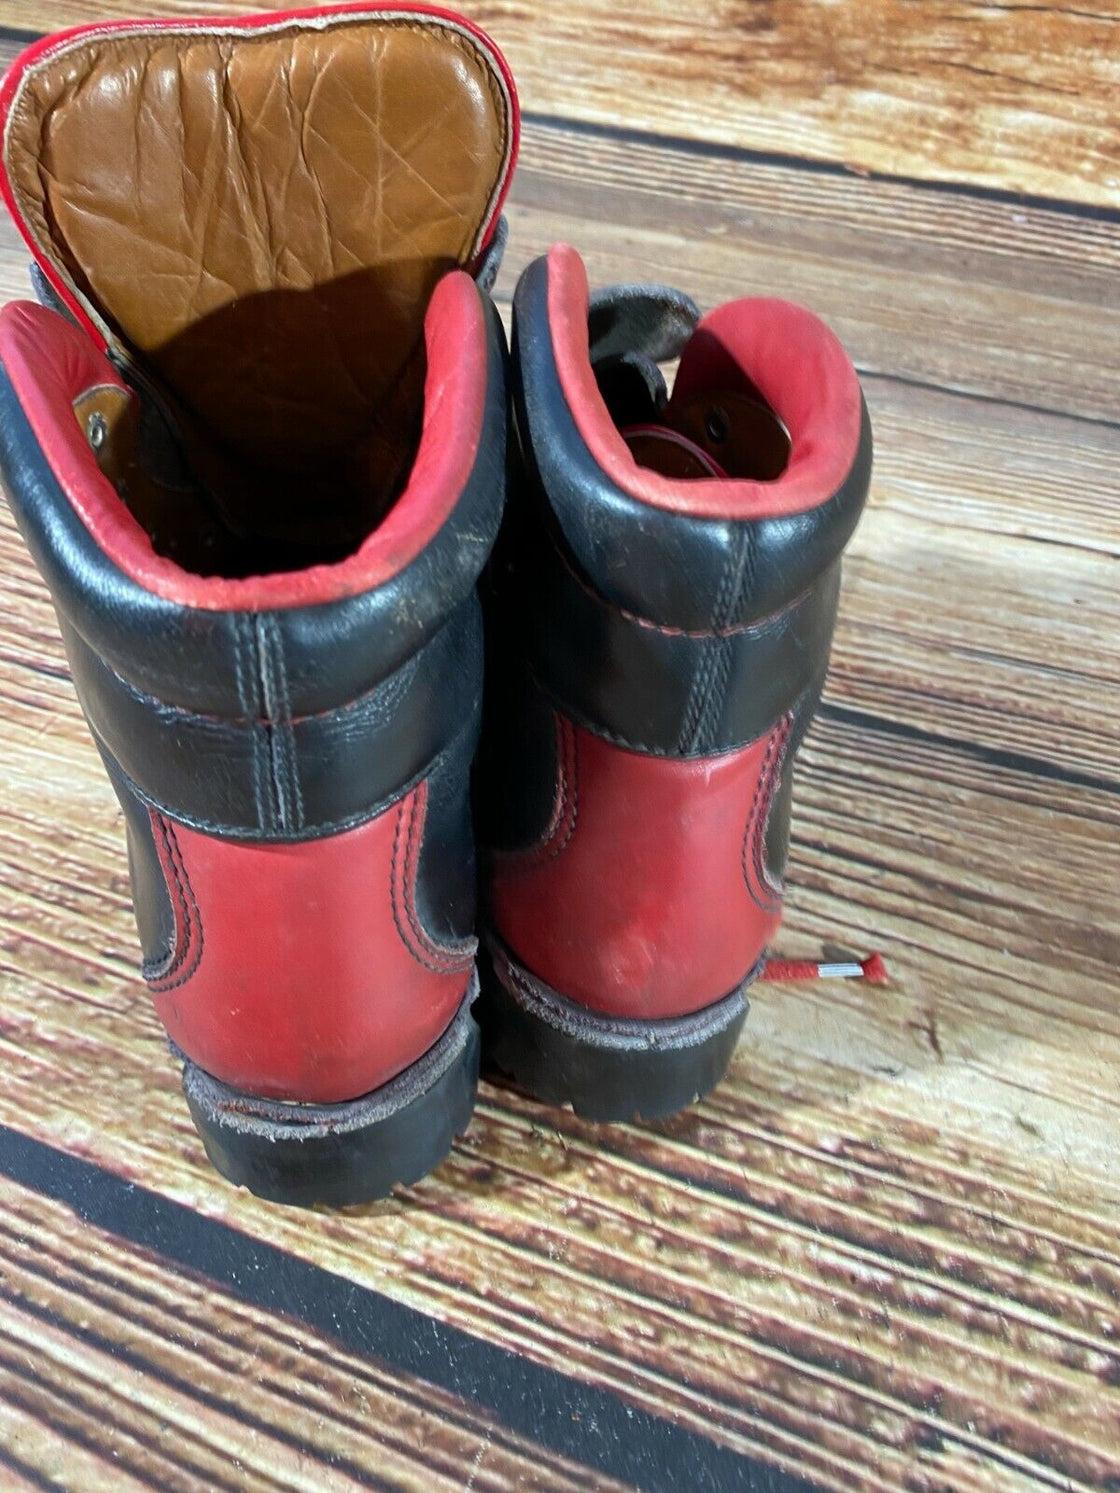 ROCCIA Leather Vintage Alpine Ski Boots EU41, US7.5, Mondo 260 Cable Bindings